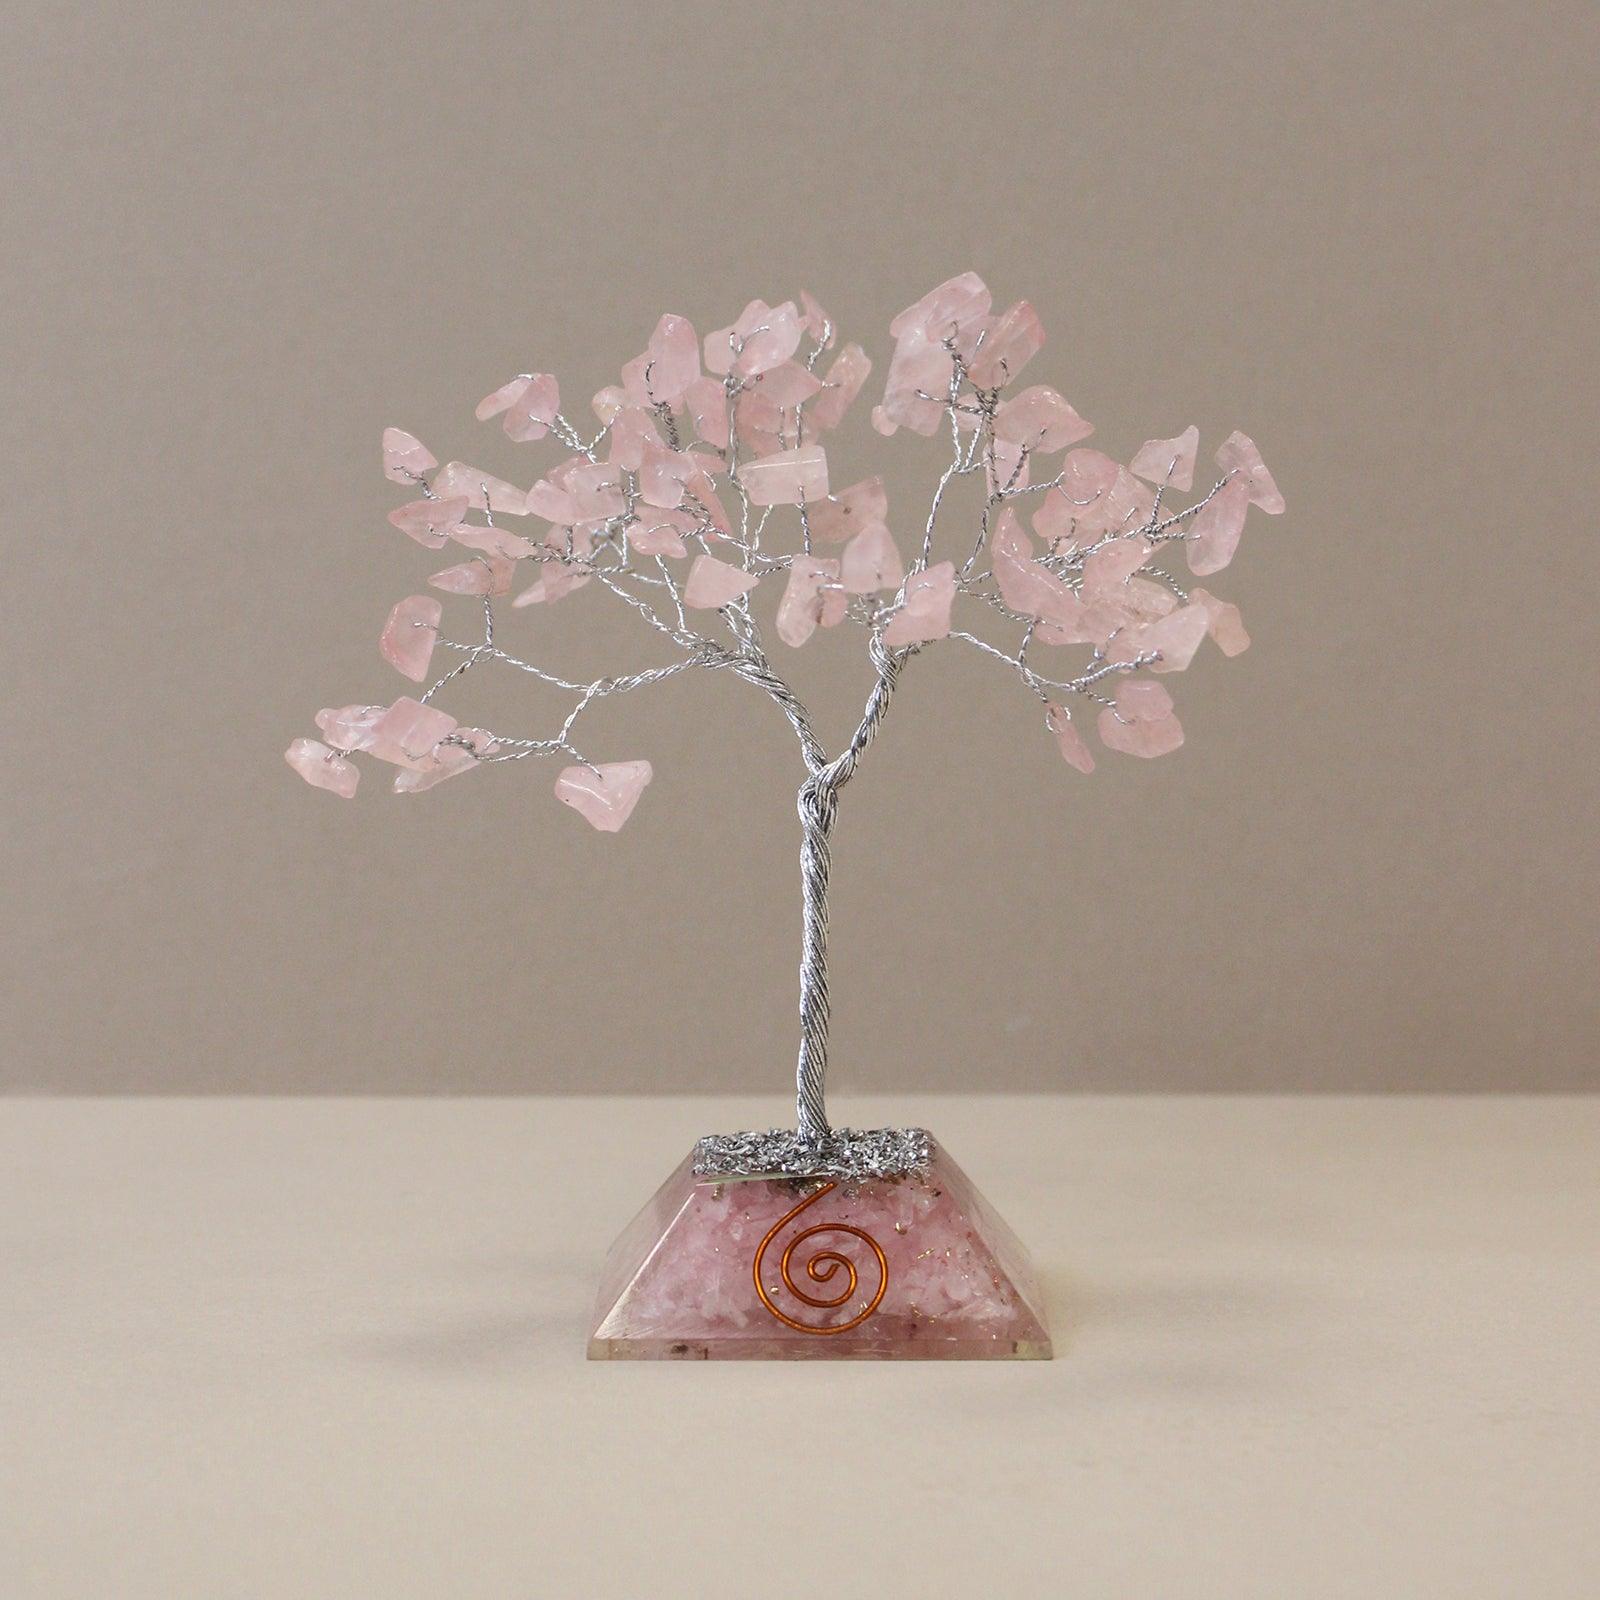 Gemstone Tree with Orgonite Base - 80 Stone - Rose Quartz - Charming Spaces